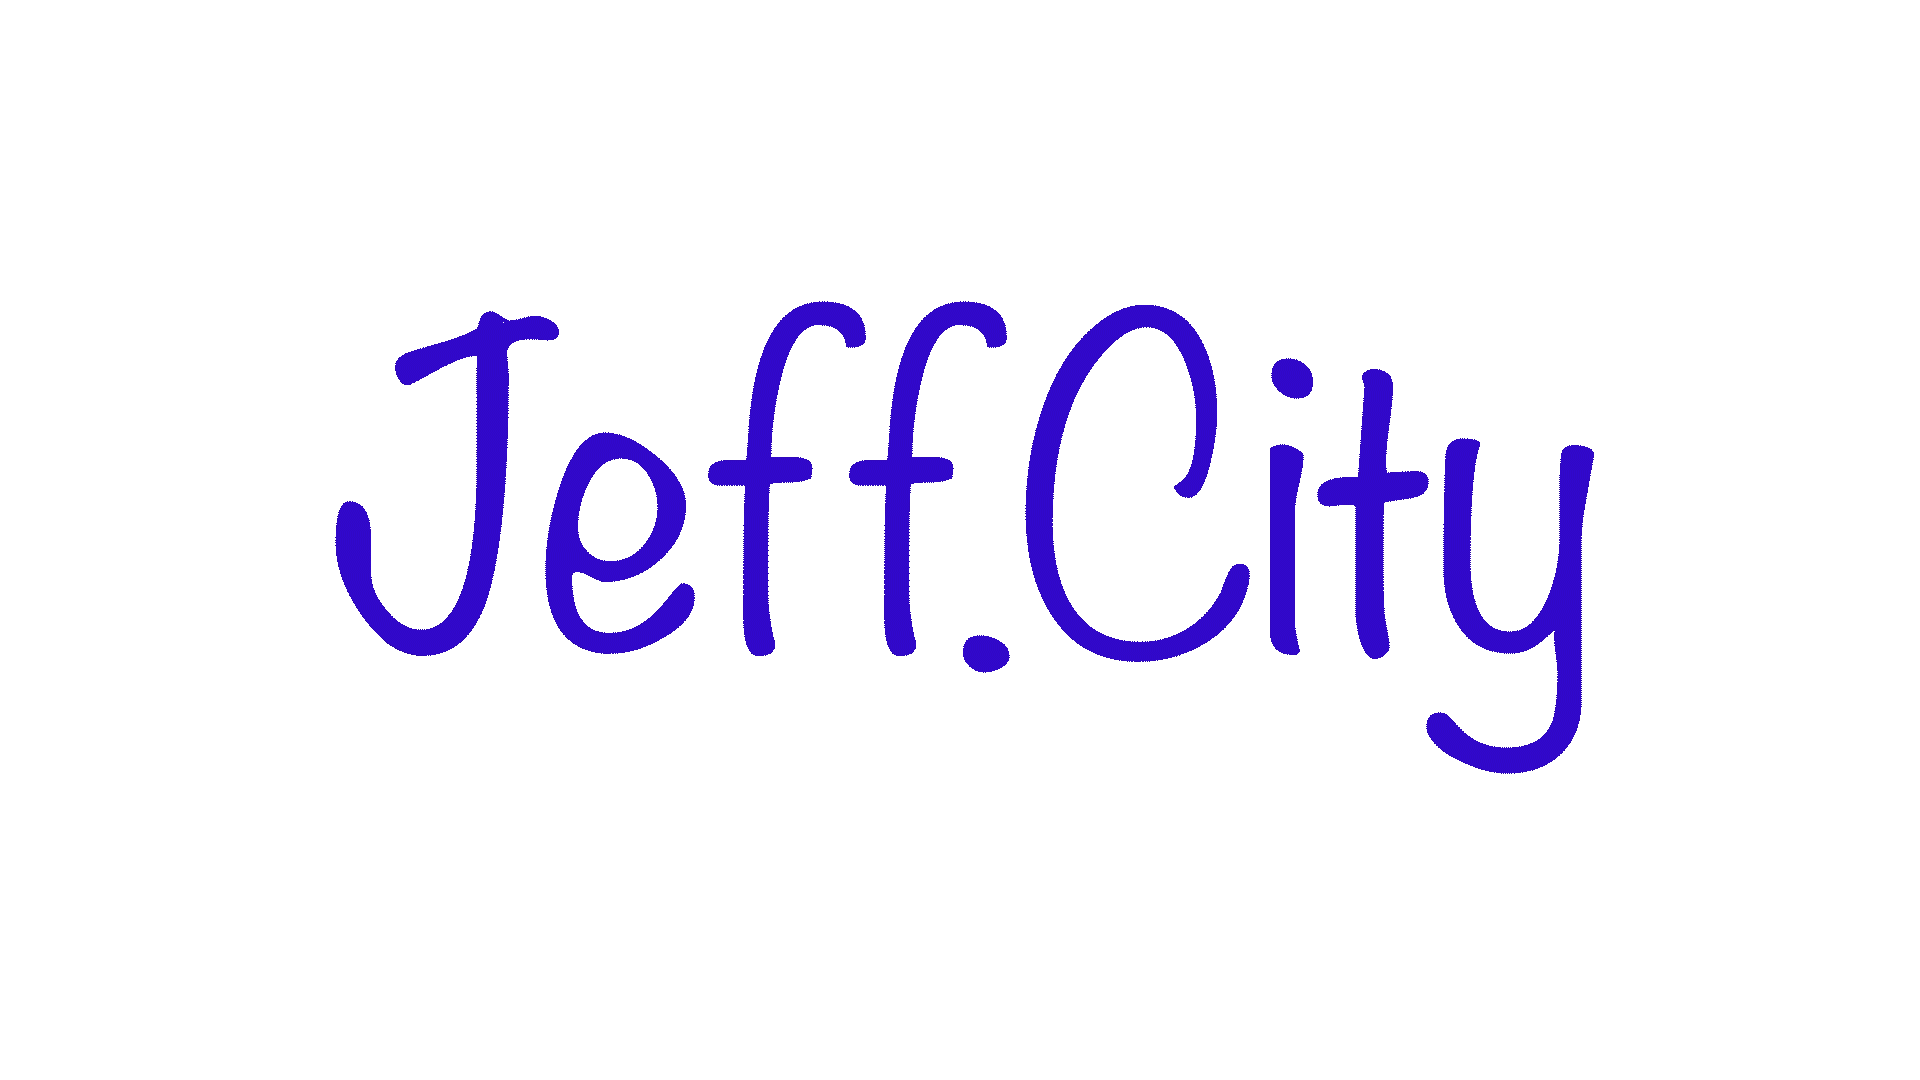 Jeff.City